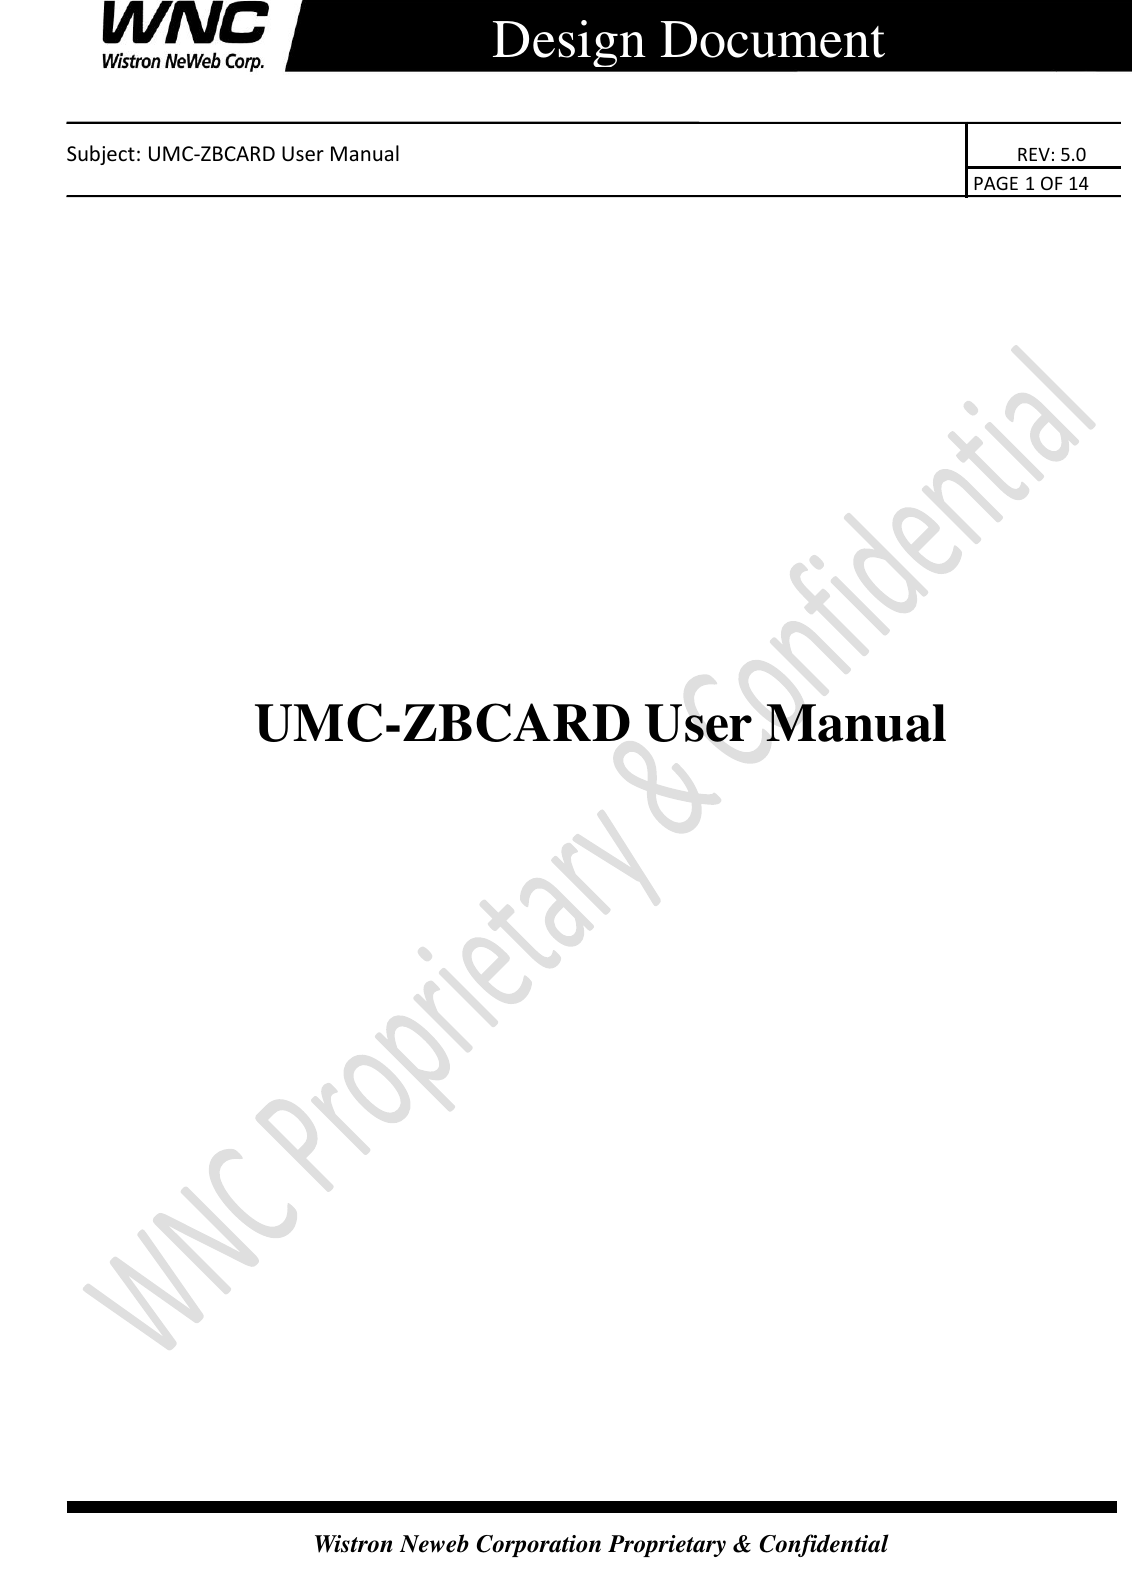    Subject: UMC-ZBCARD User Manual                                                                      REV: 5.0                                                                                        PAGE 1 OF 14  Wistron Neweb Corporation Proprietary &amp; Confidential      Design Document              UMC-ZBCARD User Manual               